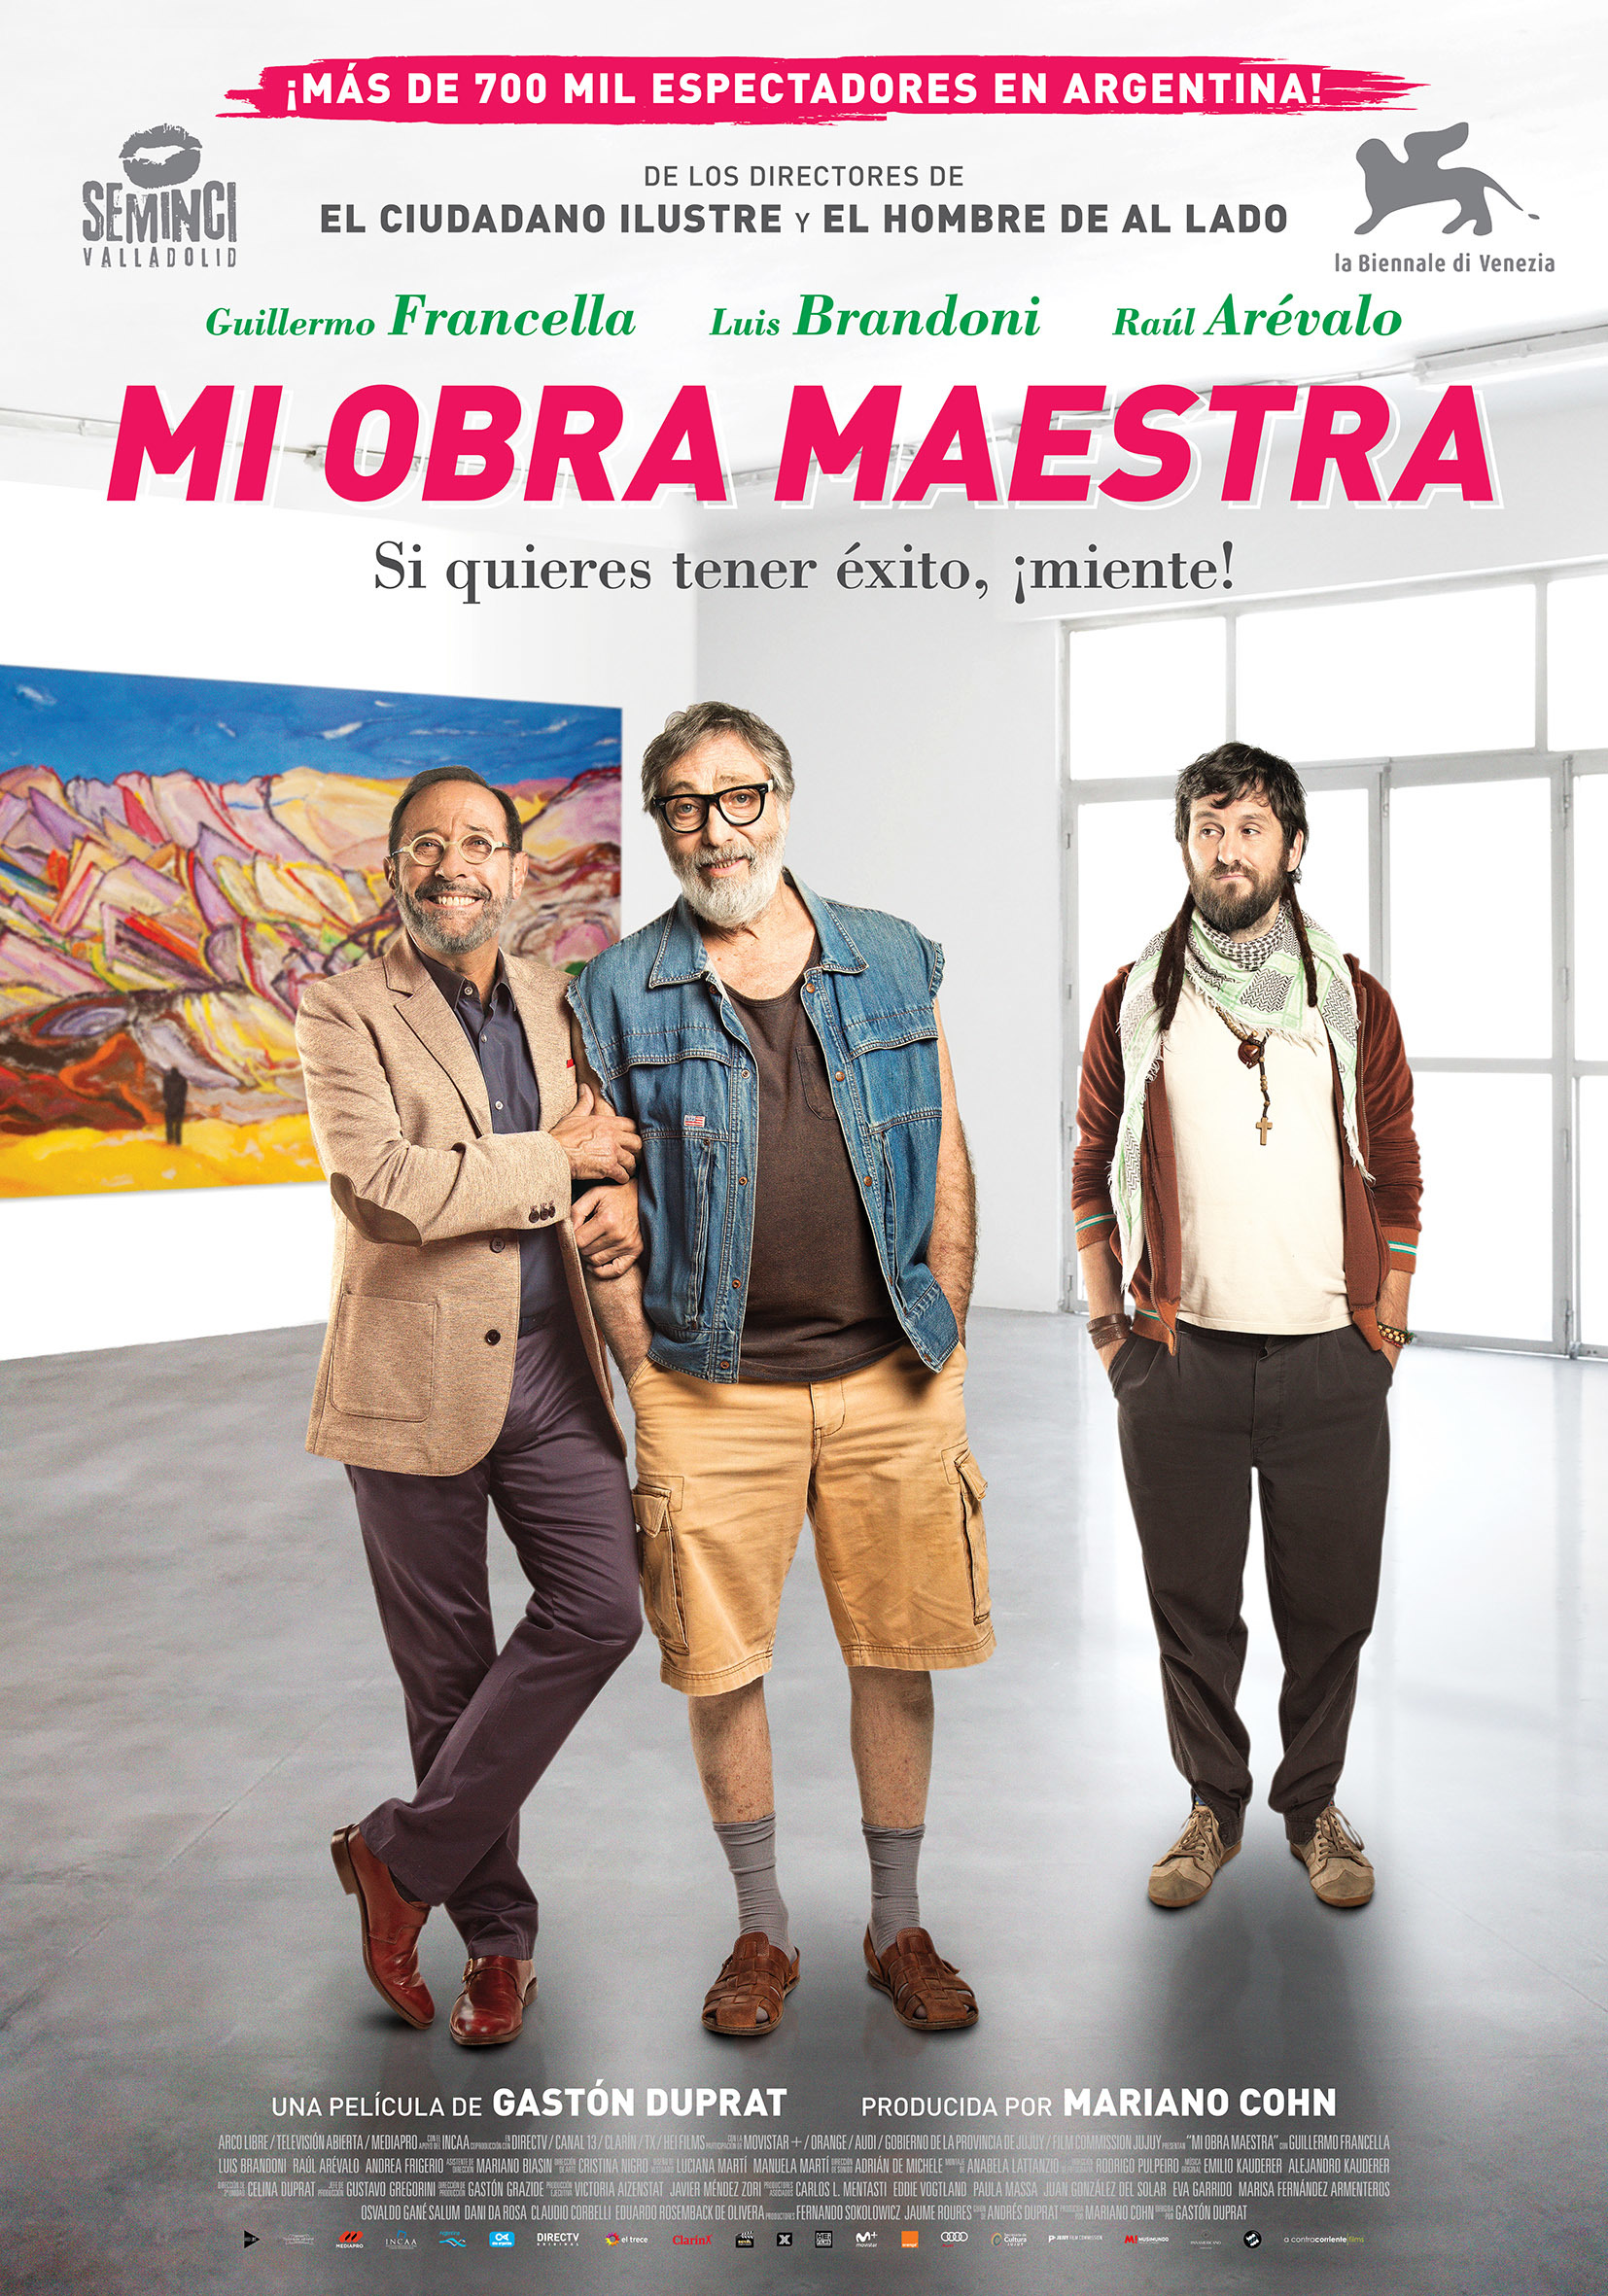 Mega Sized Movie Poster Image for Mi obra maestra (#2 of 2)